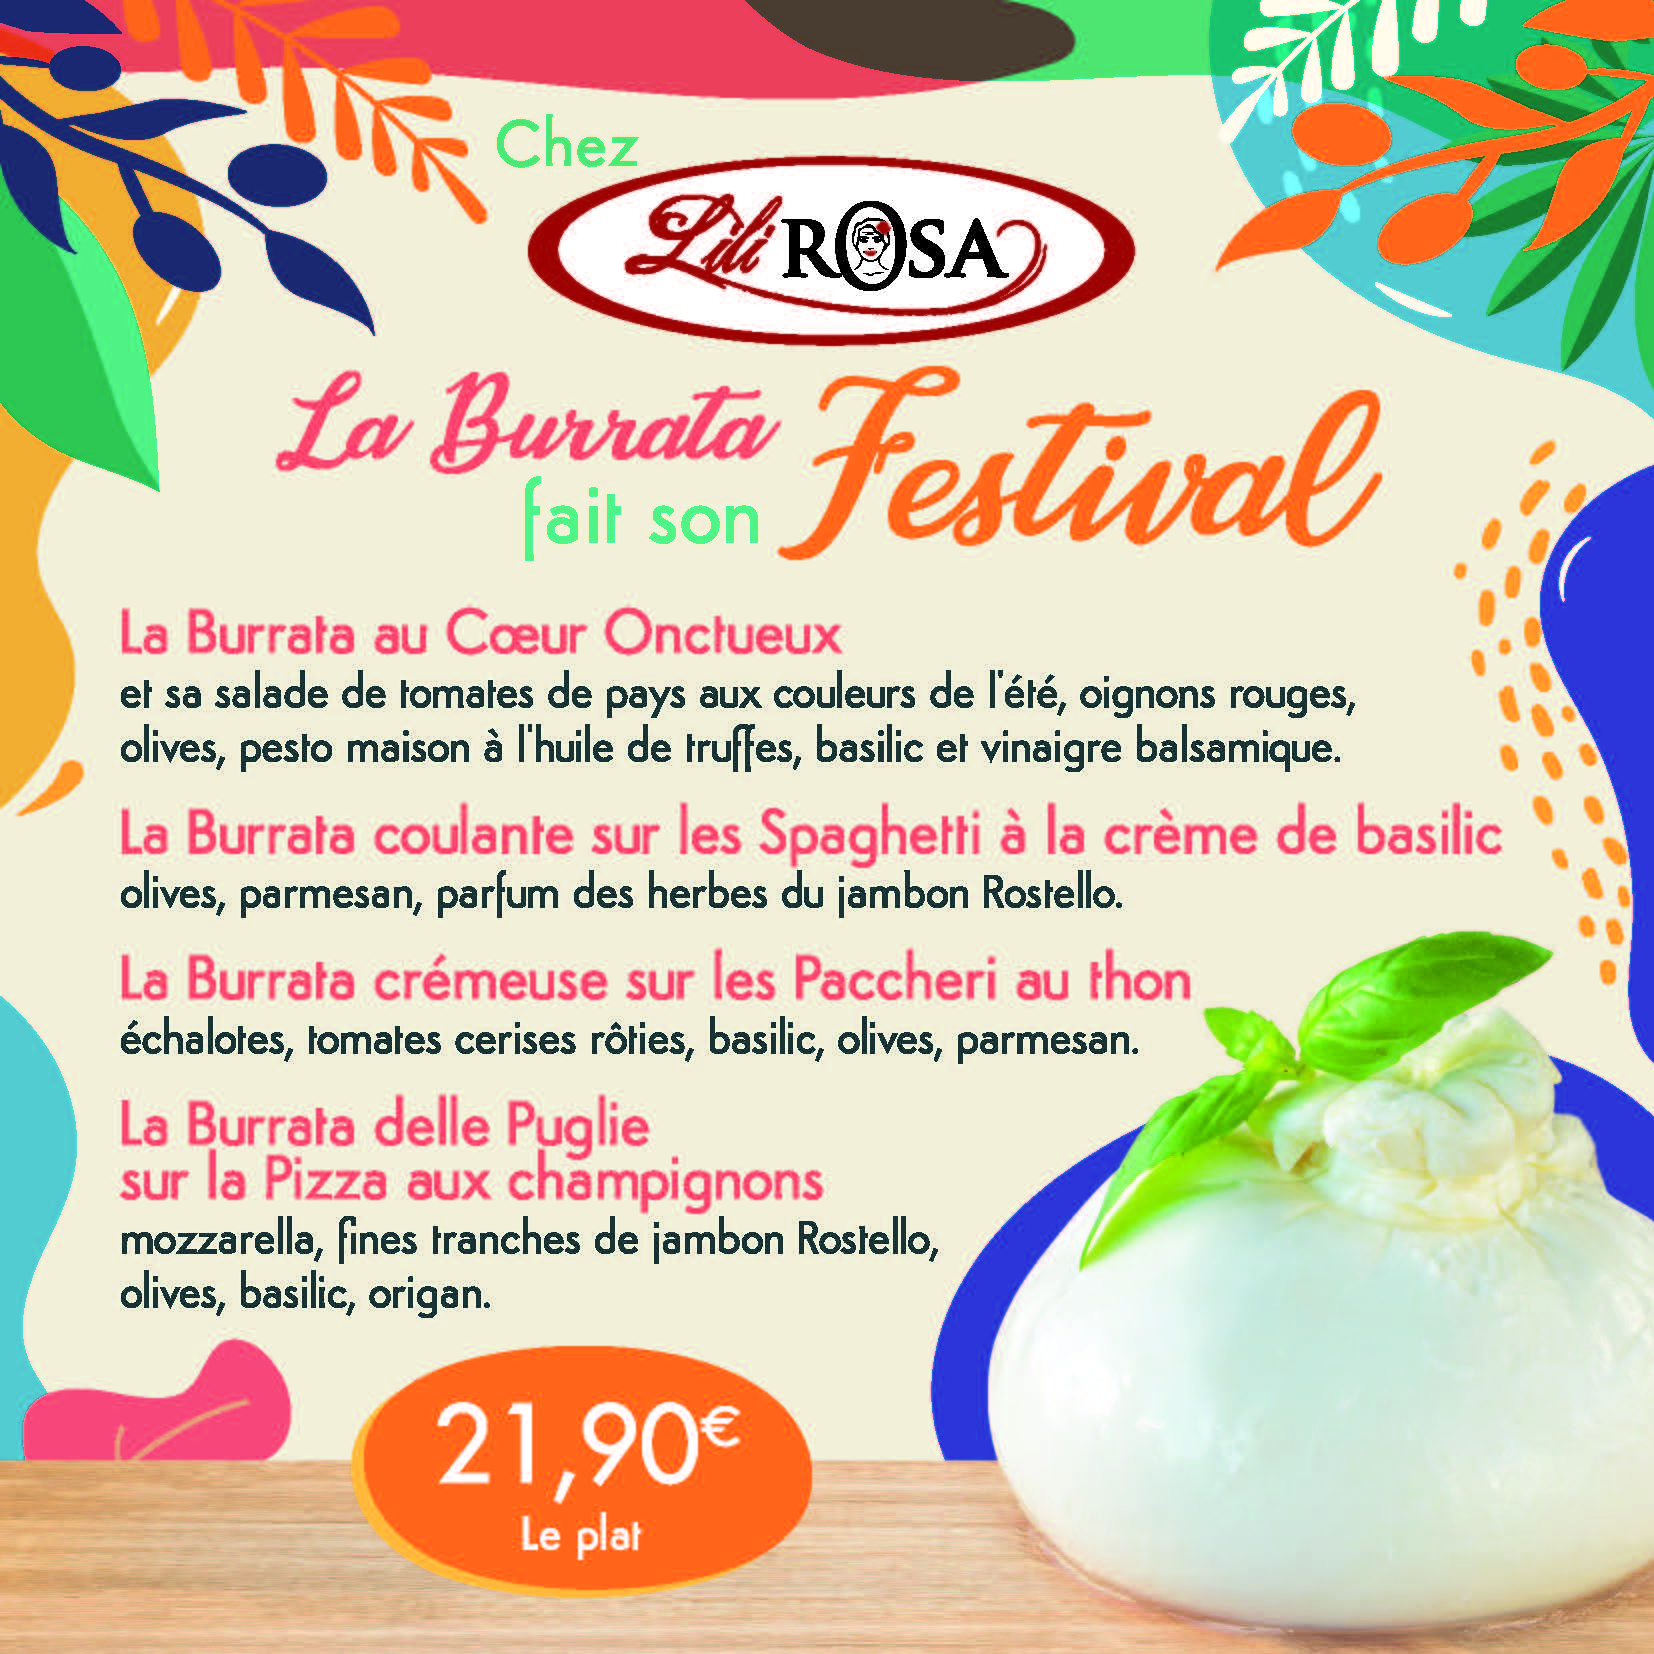 La Burrata fait son festival chez Lili Rosa